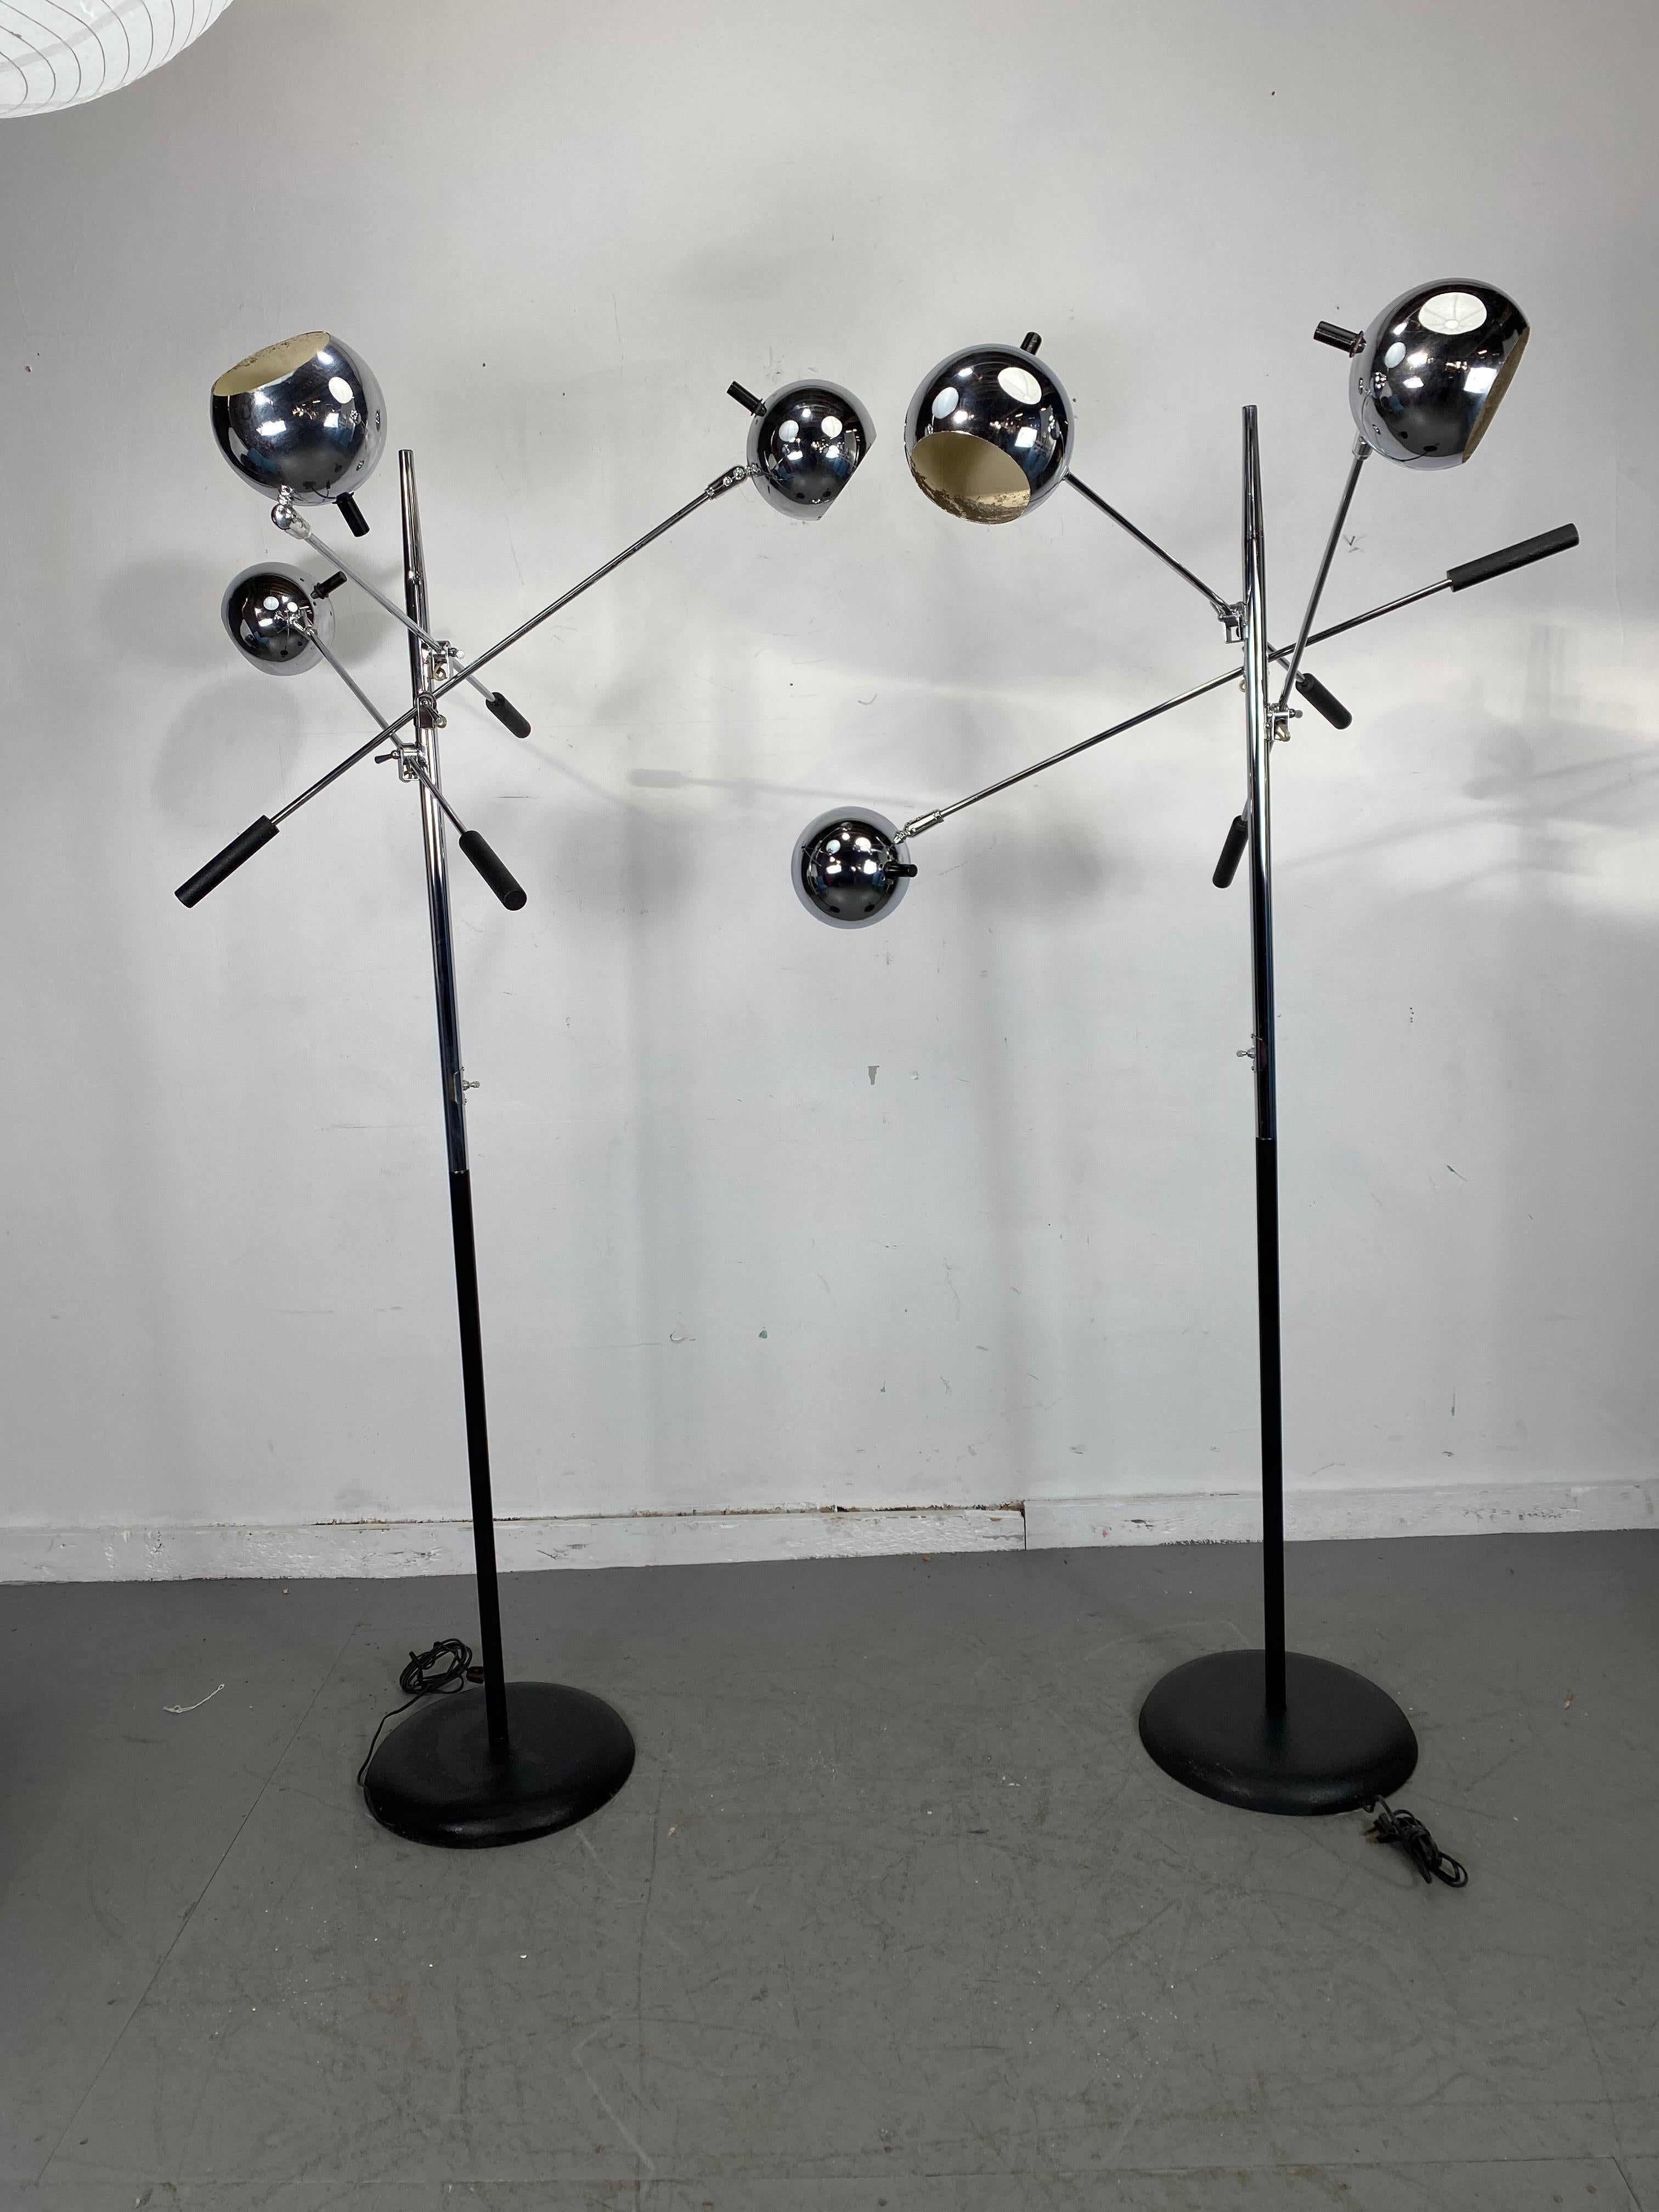 Matched Pair of Robert Sonneman Triennale Eyegball Orbiter Floor Lamps 1